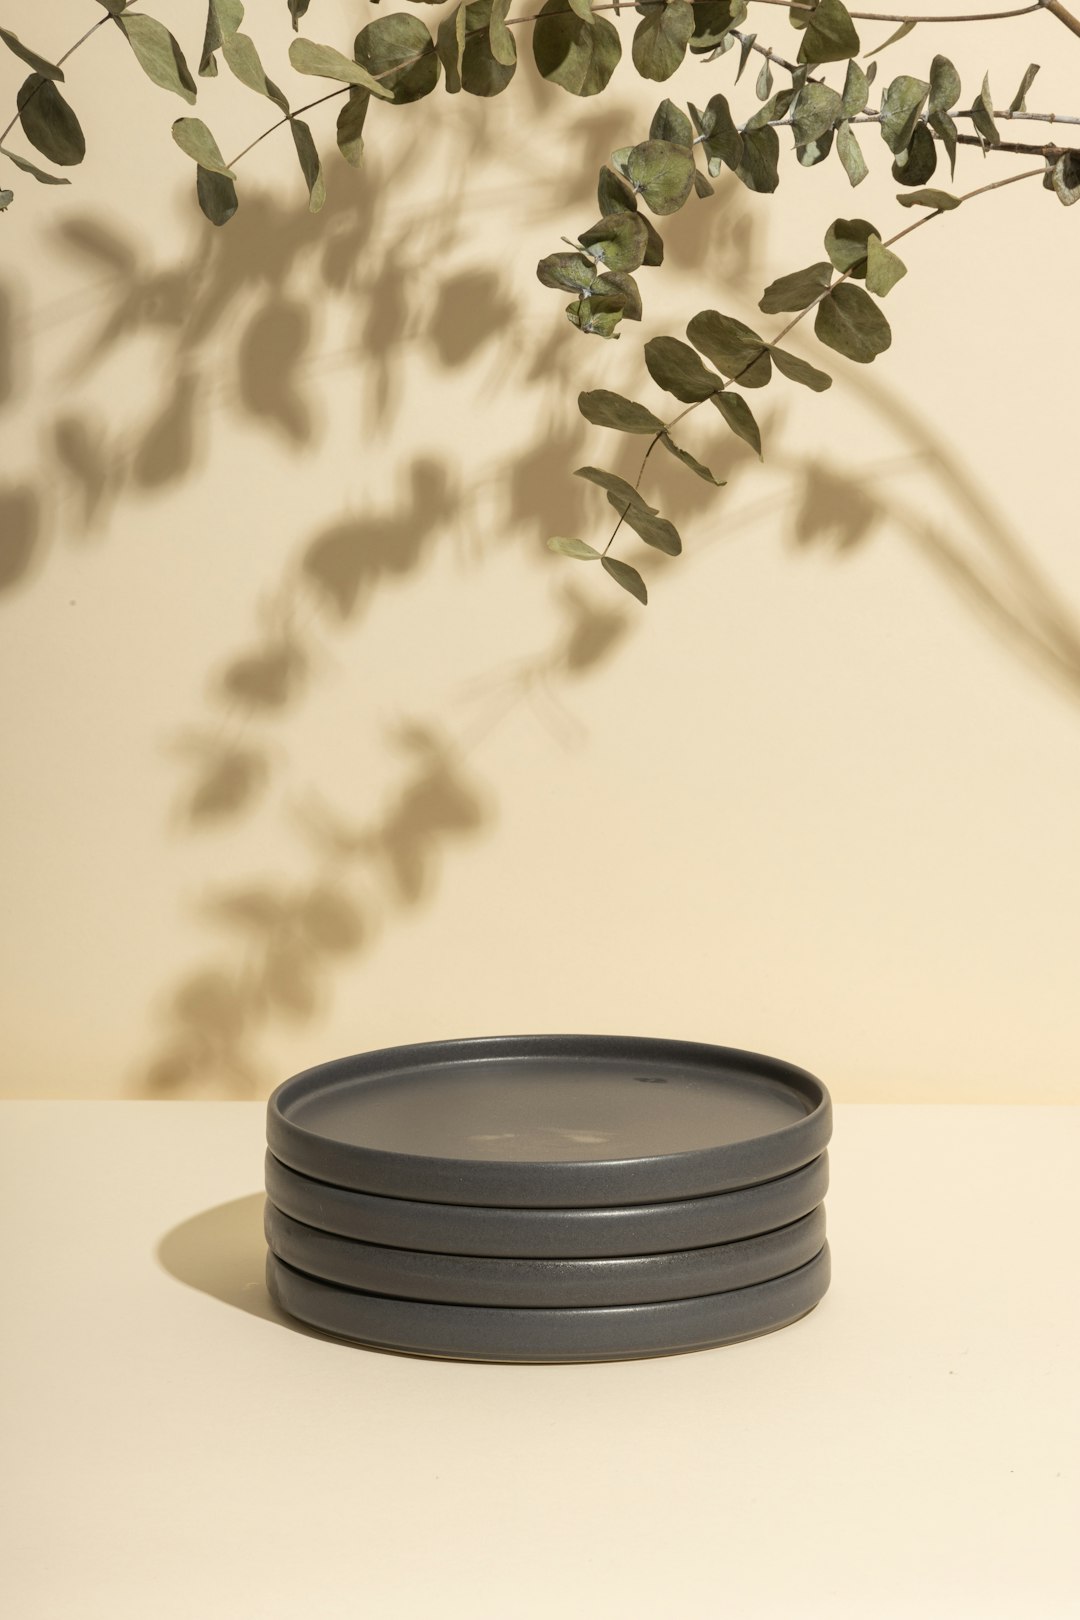  green plant on white ceramic pot plate